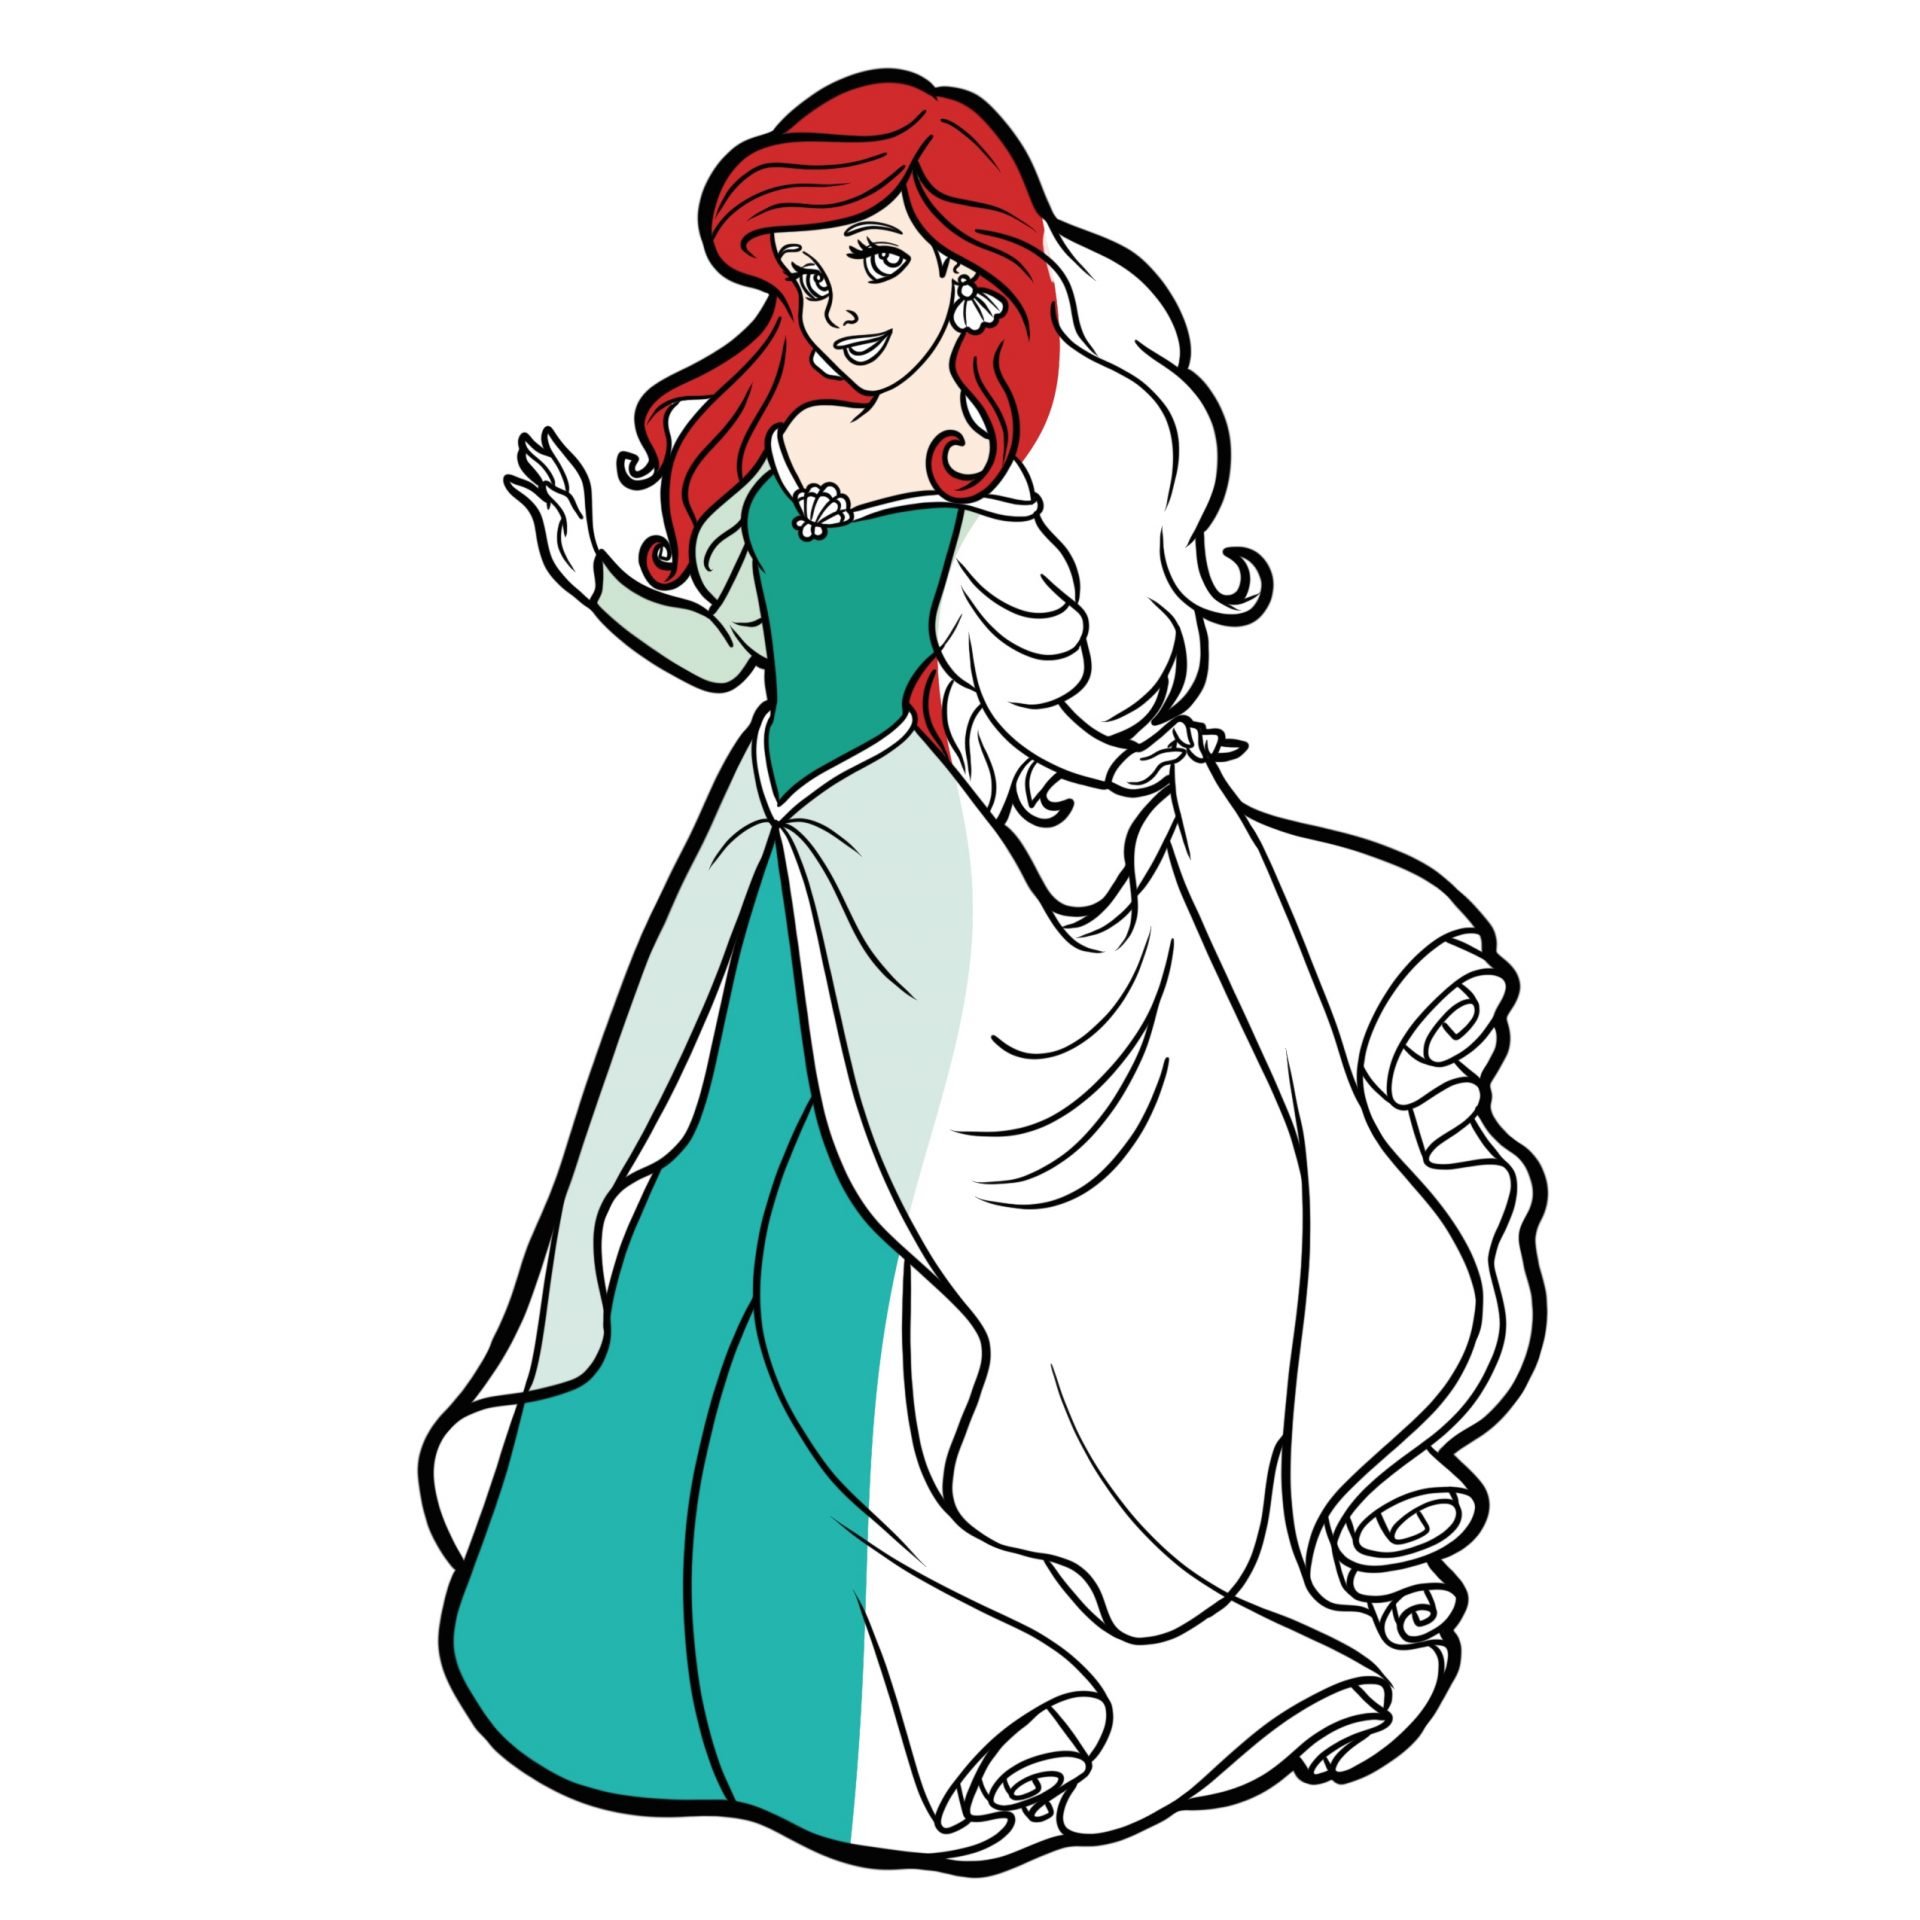 Princess ariel coloring page